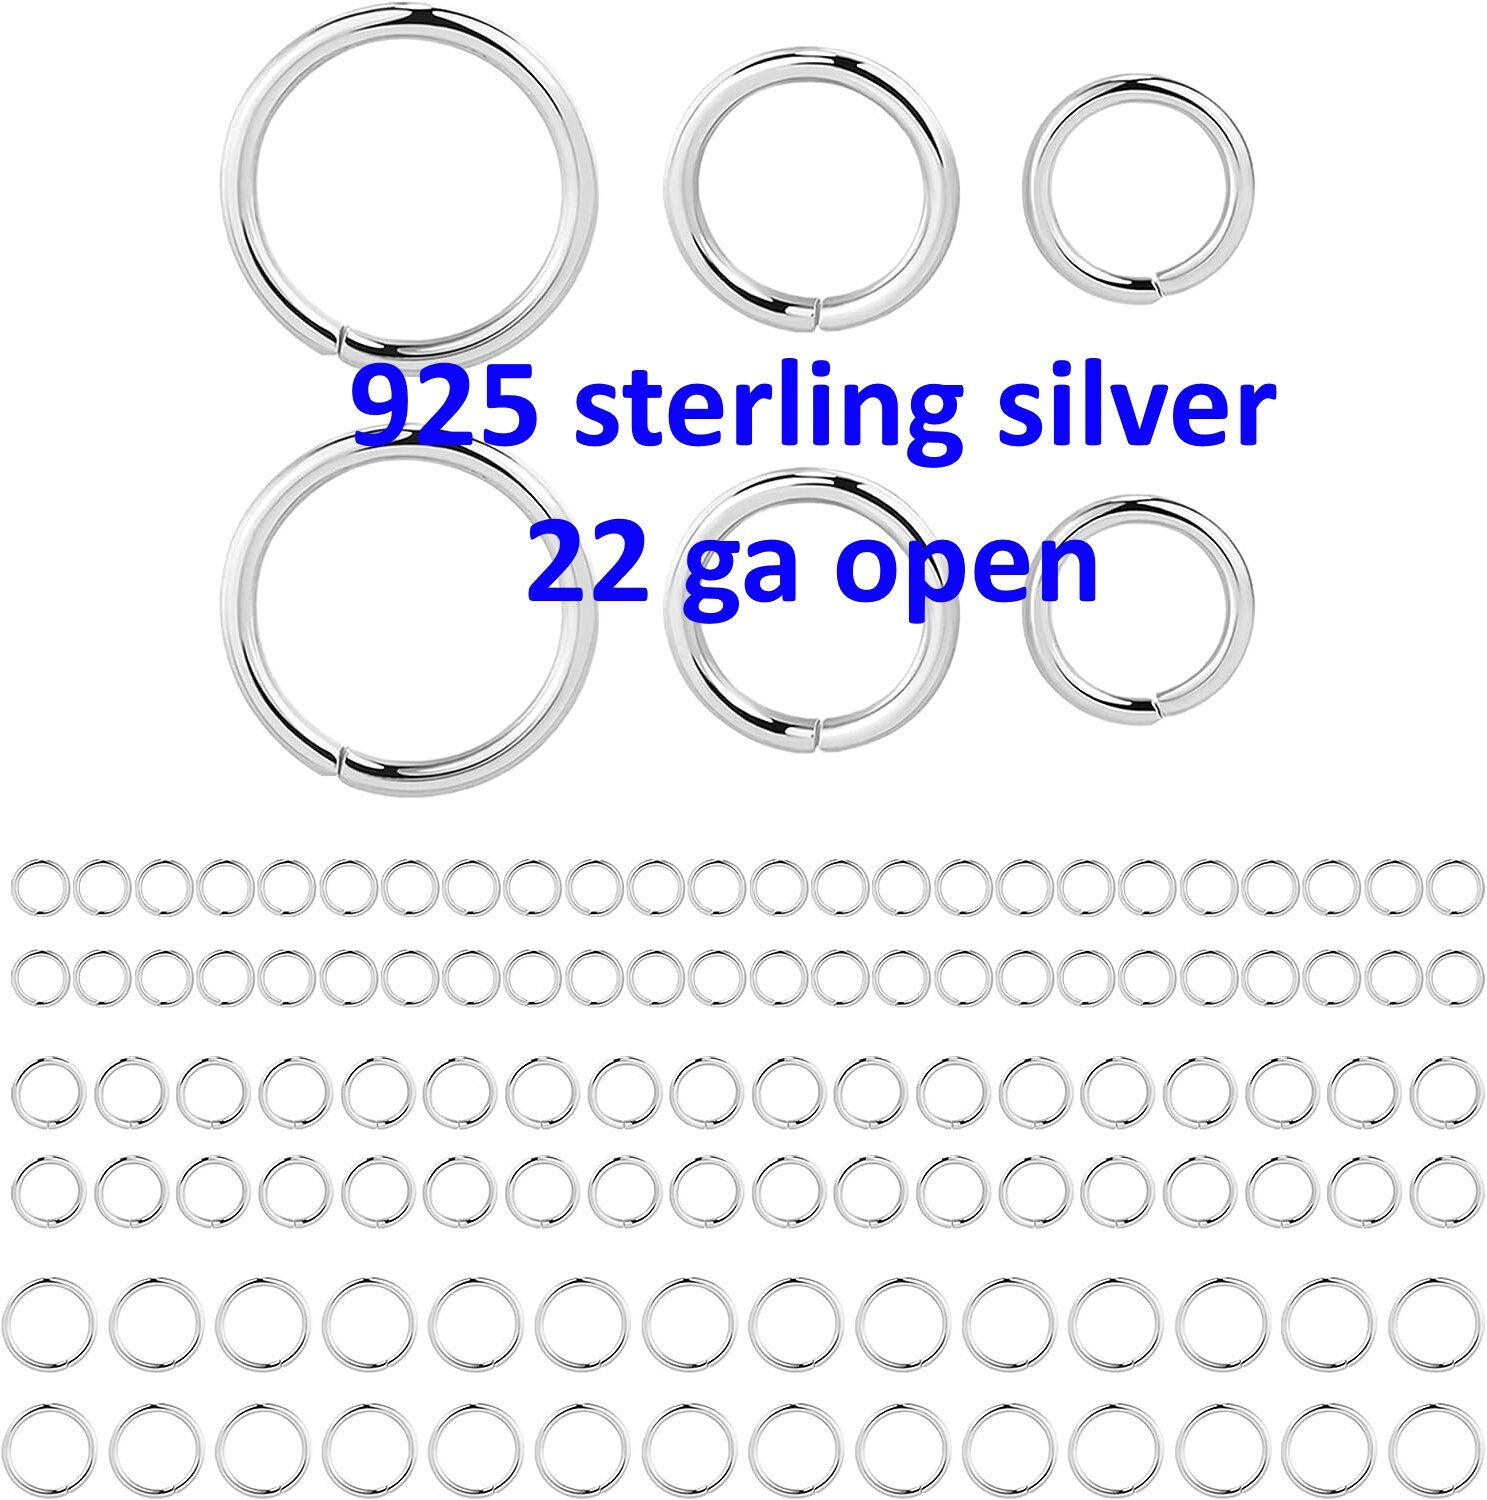 Sterling Silver 3.5mm I.D. 20 Gauge Jump Rings, Pack of 20